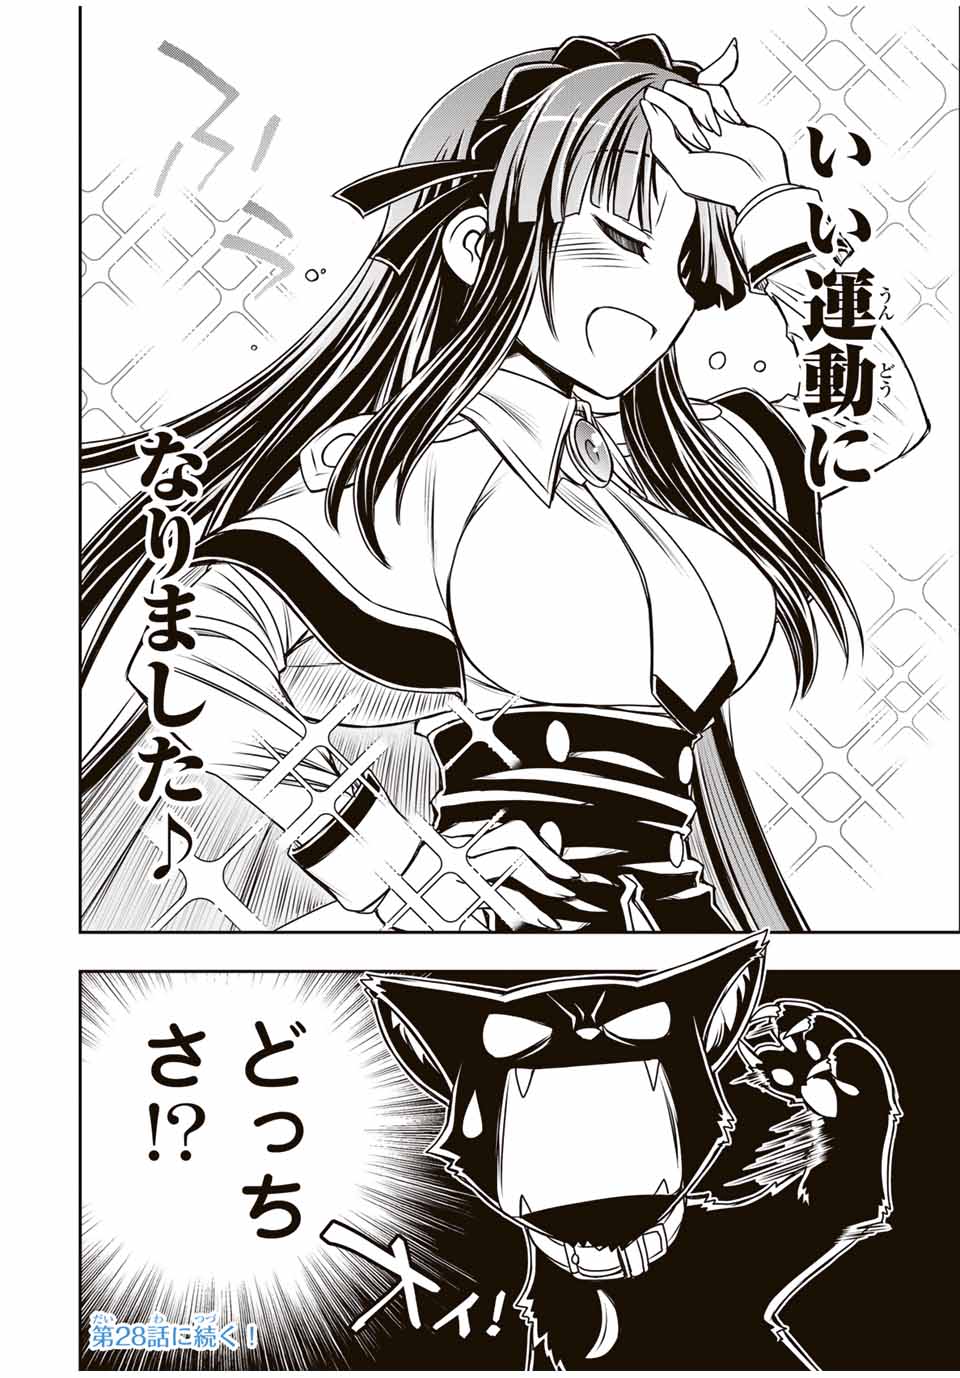 Nengan no Akuyaku Reijou (Last Boss) no Karada wo Teniiretazo!  - Chapter 27 - Page 20